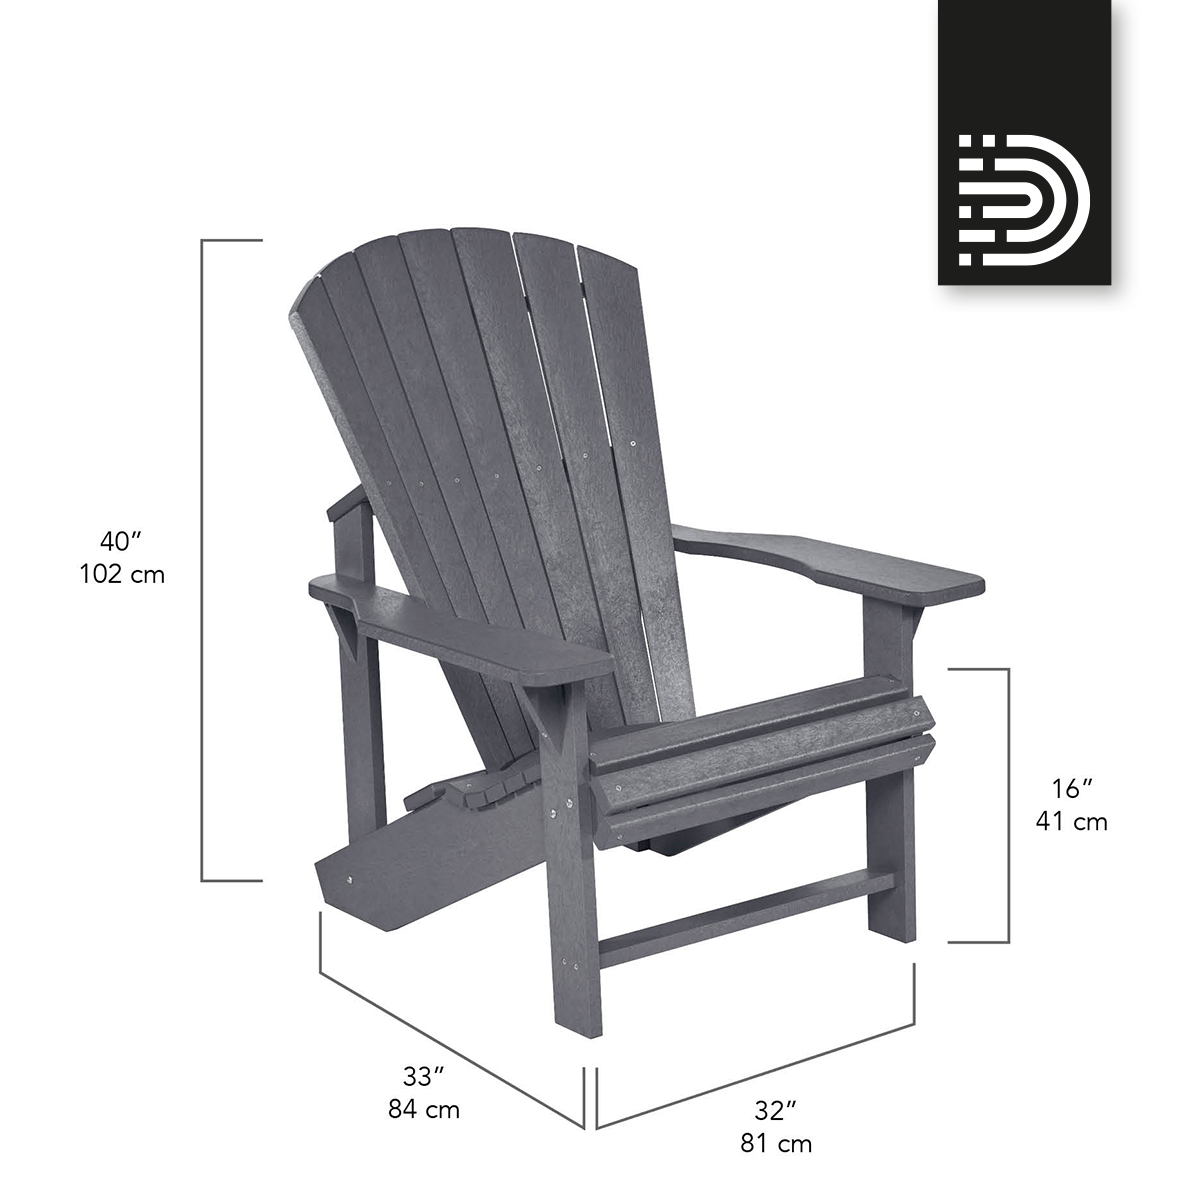  C01 Classic Adirondack Chair - navy blue 20